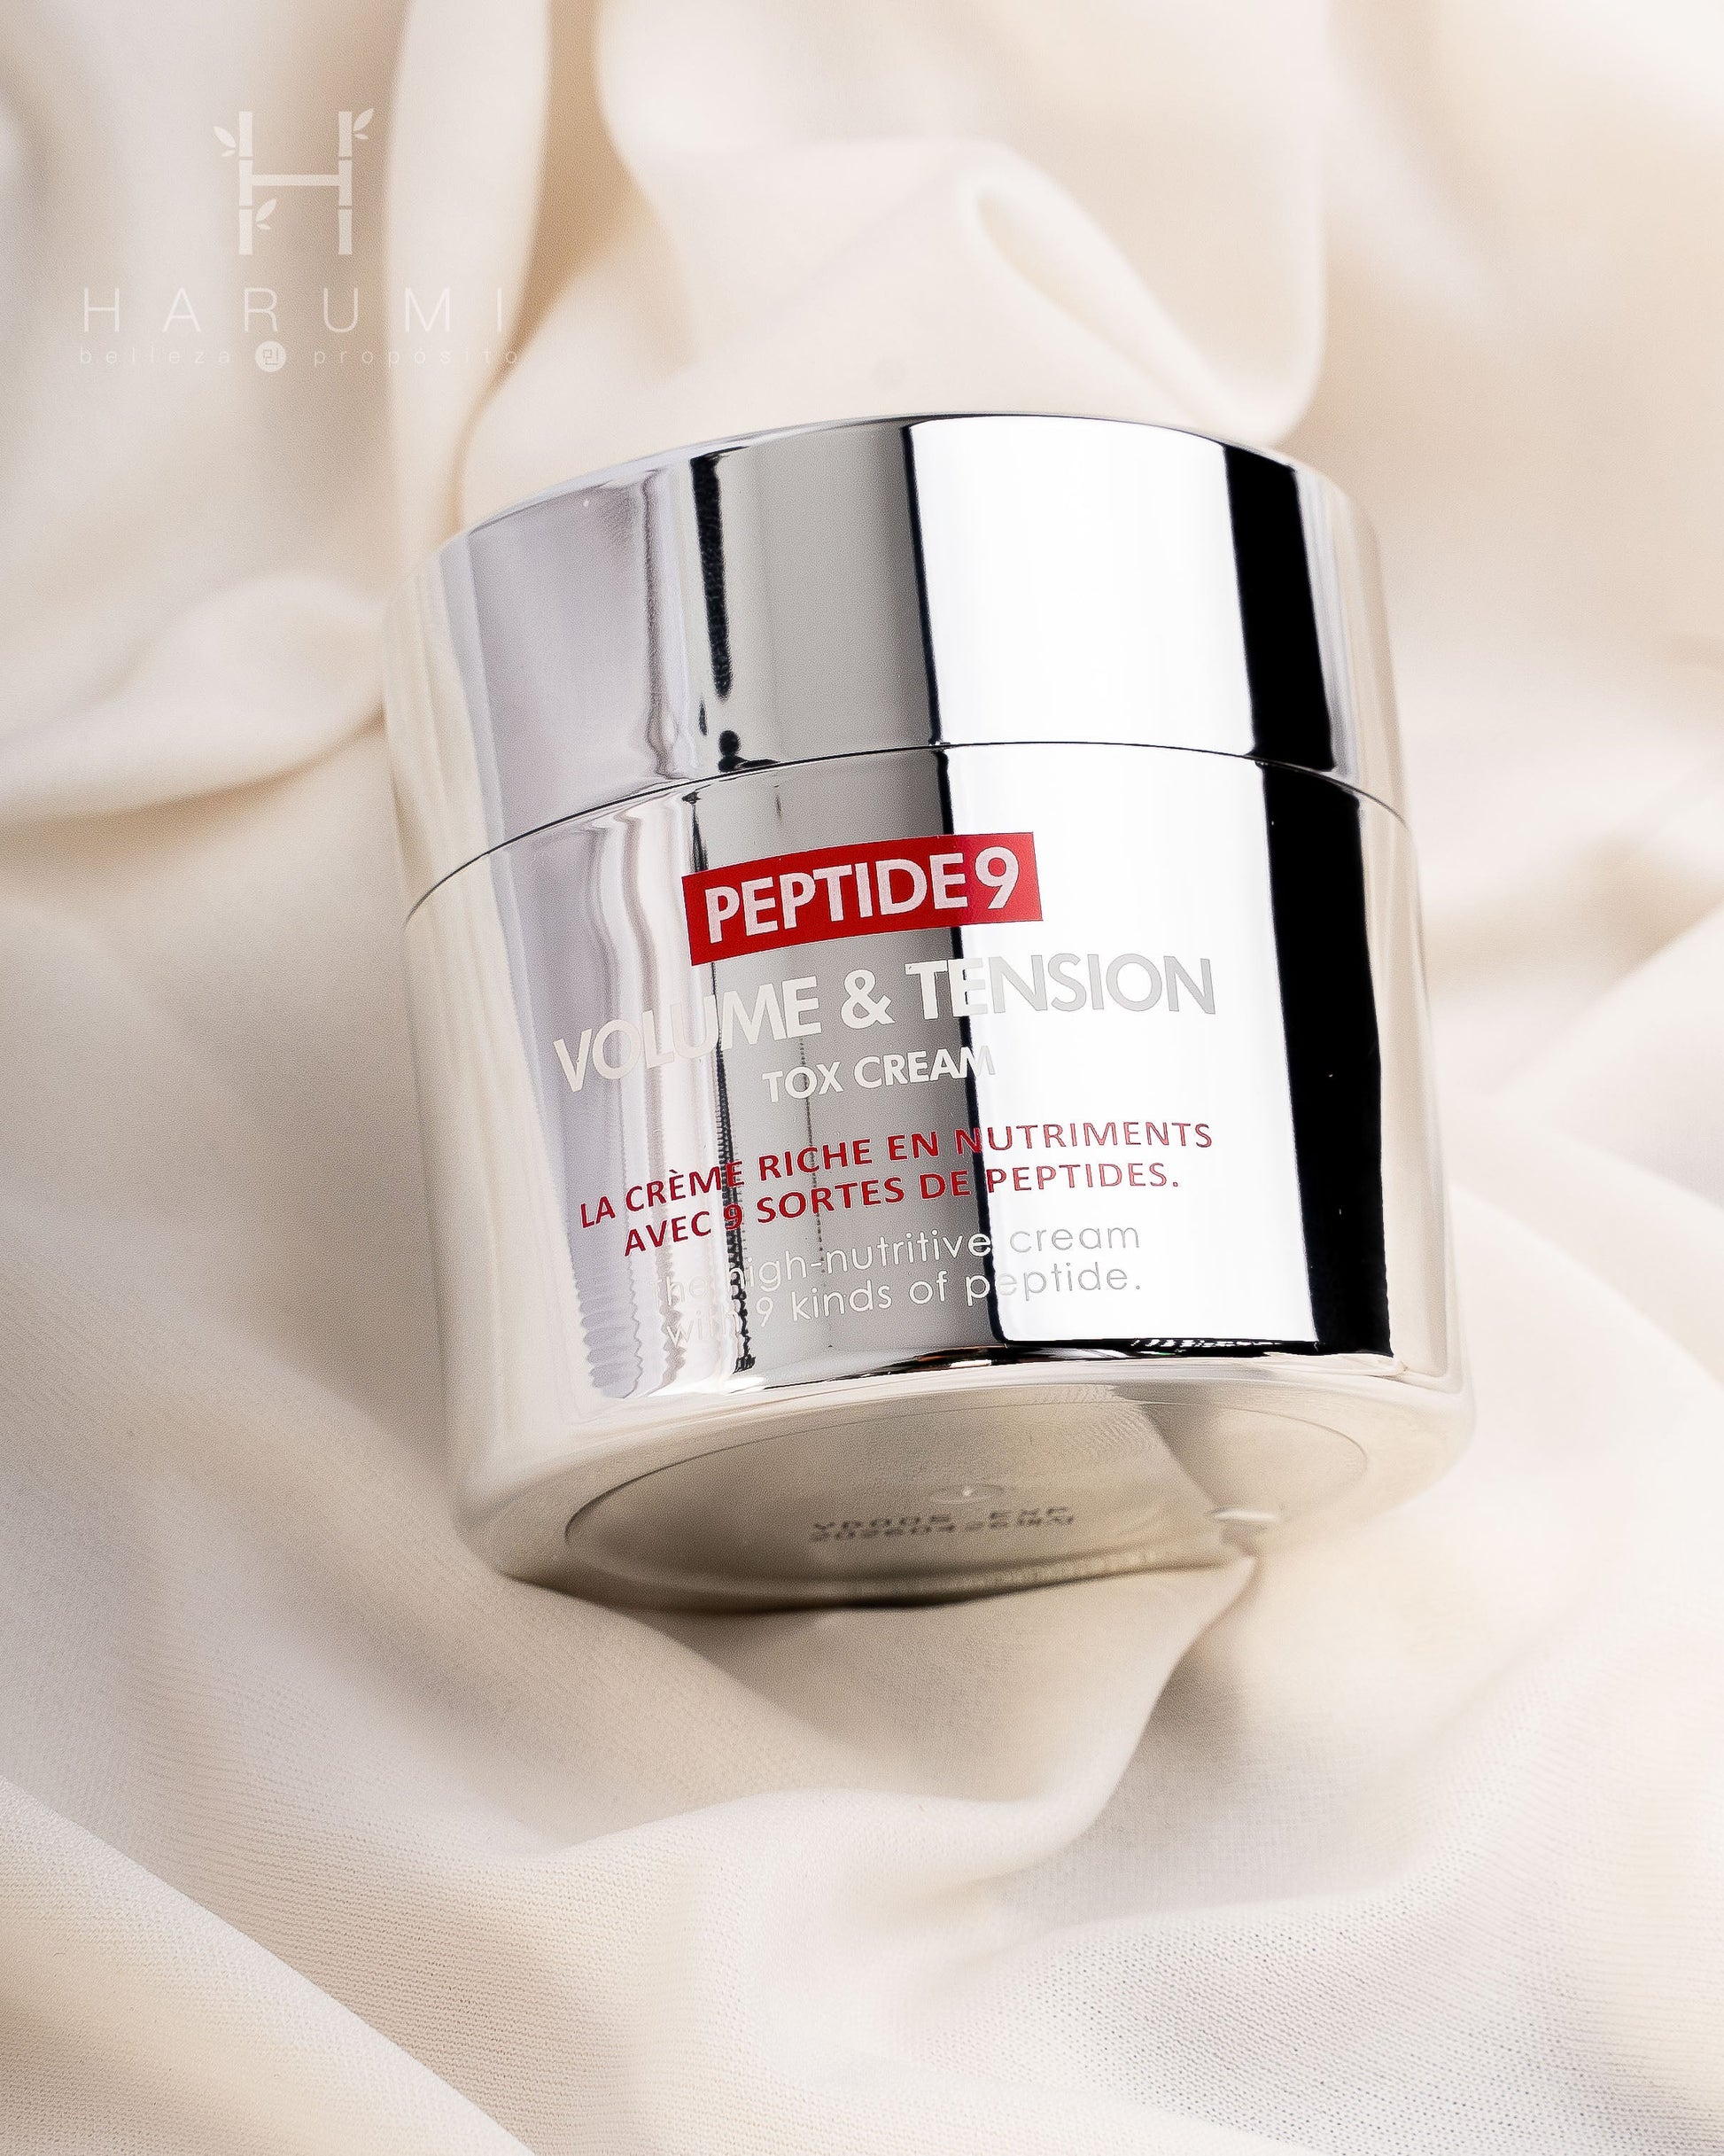 Medipeel Peptide 9 Volume & Tension Tox Cream Skincare maquillaje productos de belleza coreanos en Colombia kbeauty